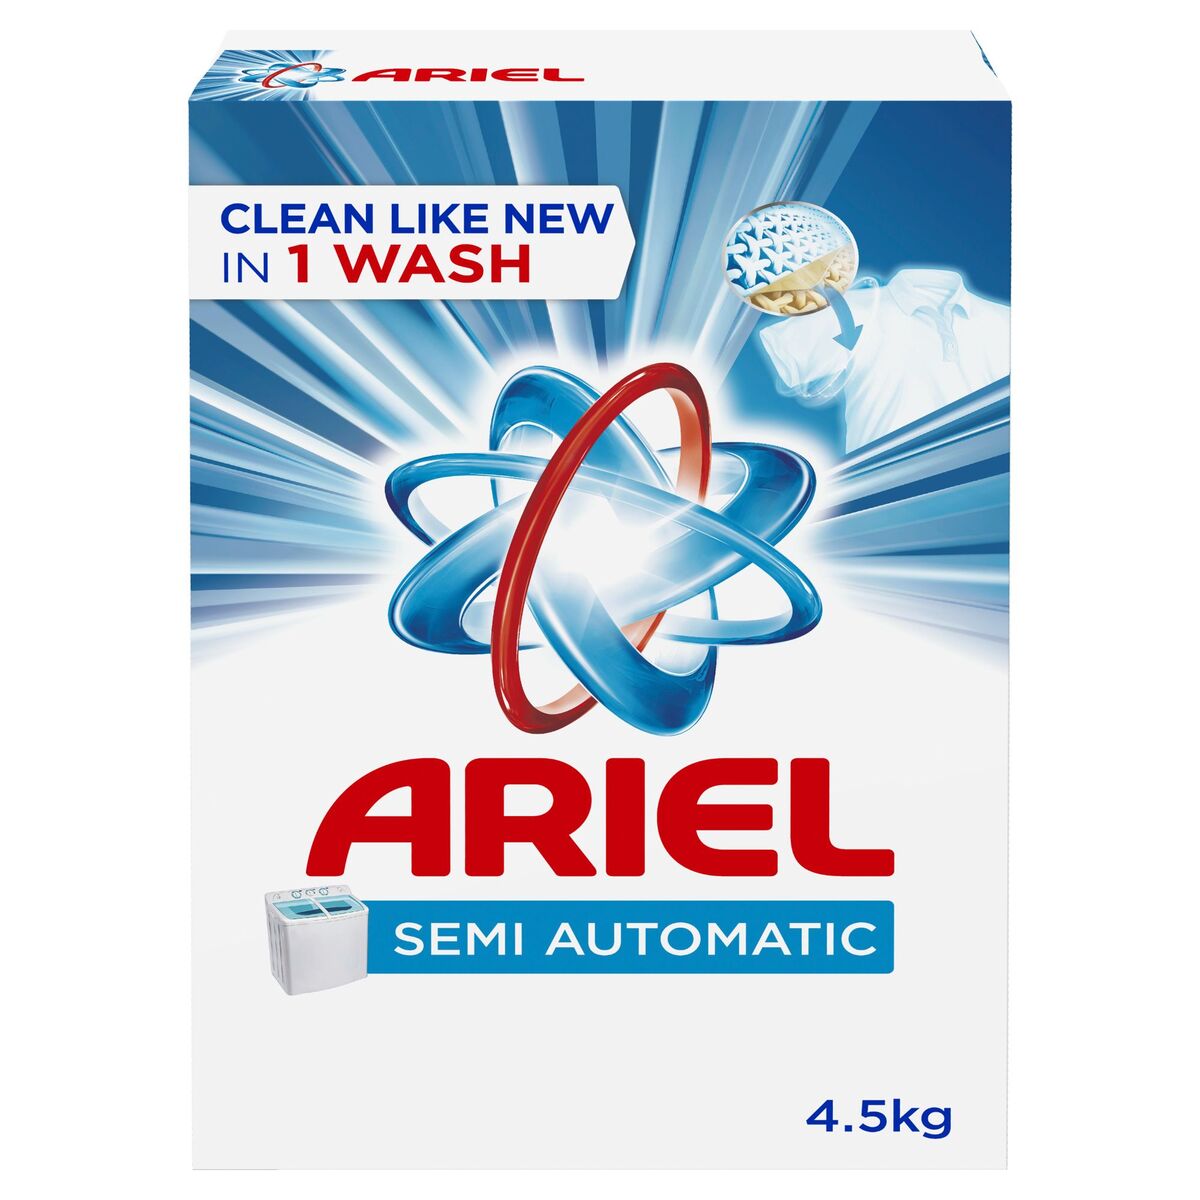 Ariel Powder Laundry Detergent Original Scent 4.5kg